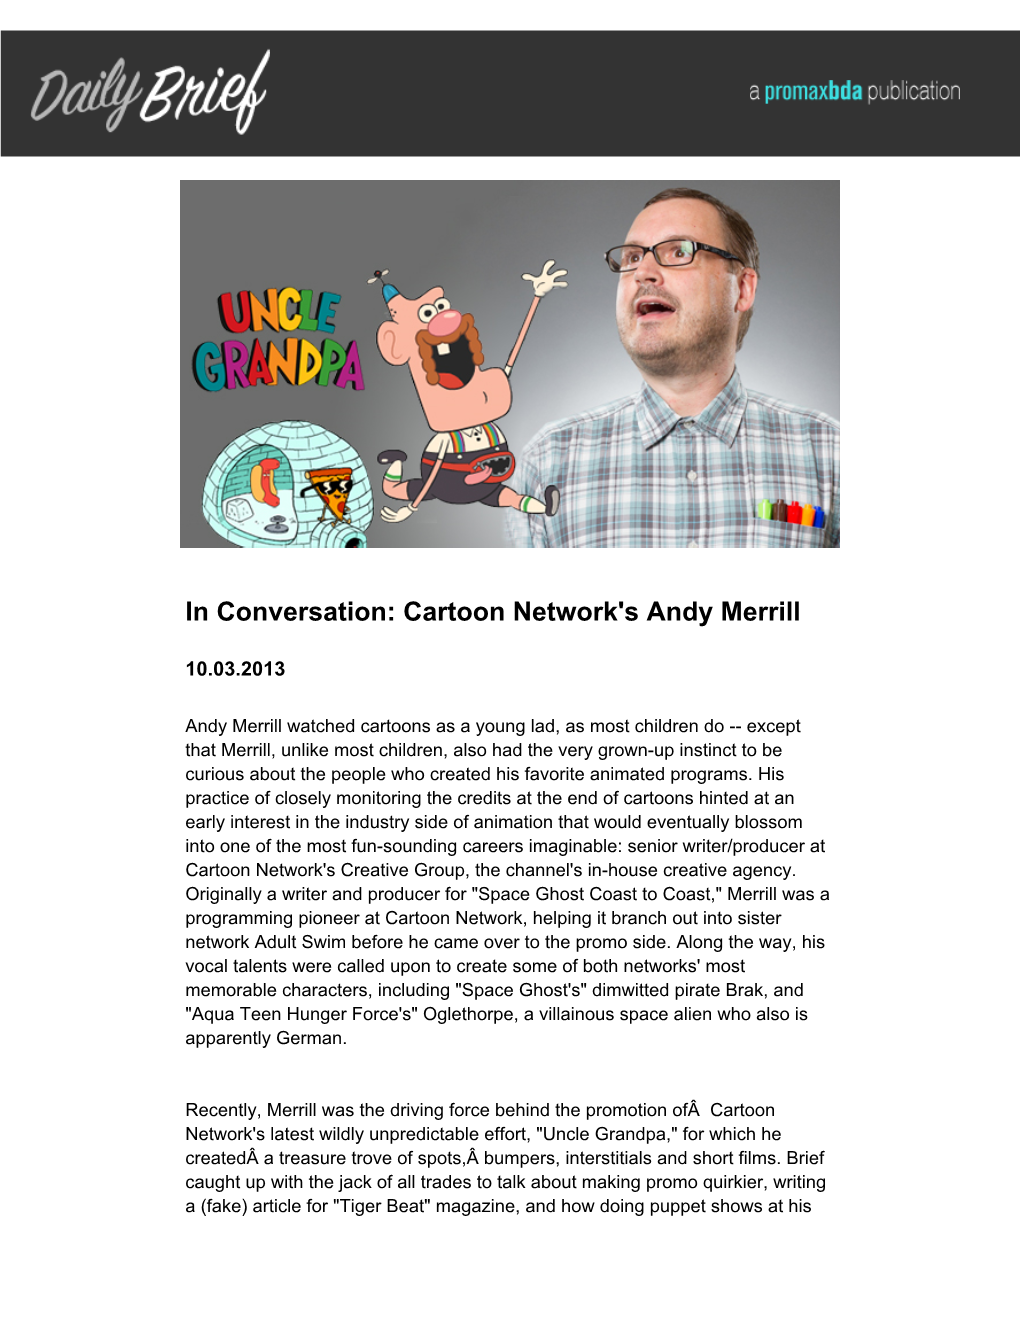 Cartoon Network's Andy Merrill